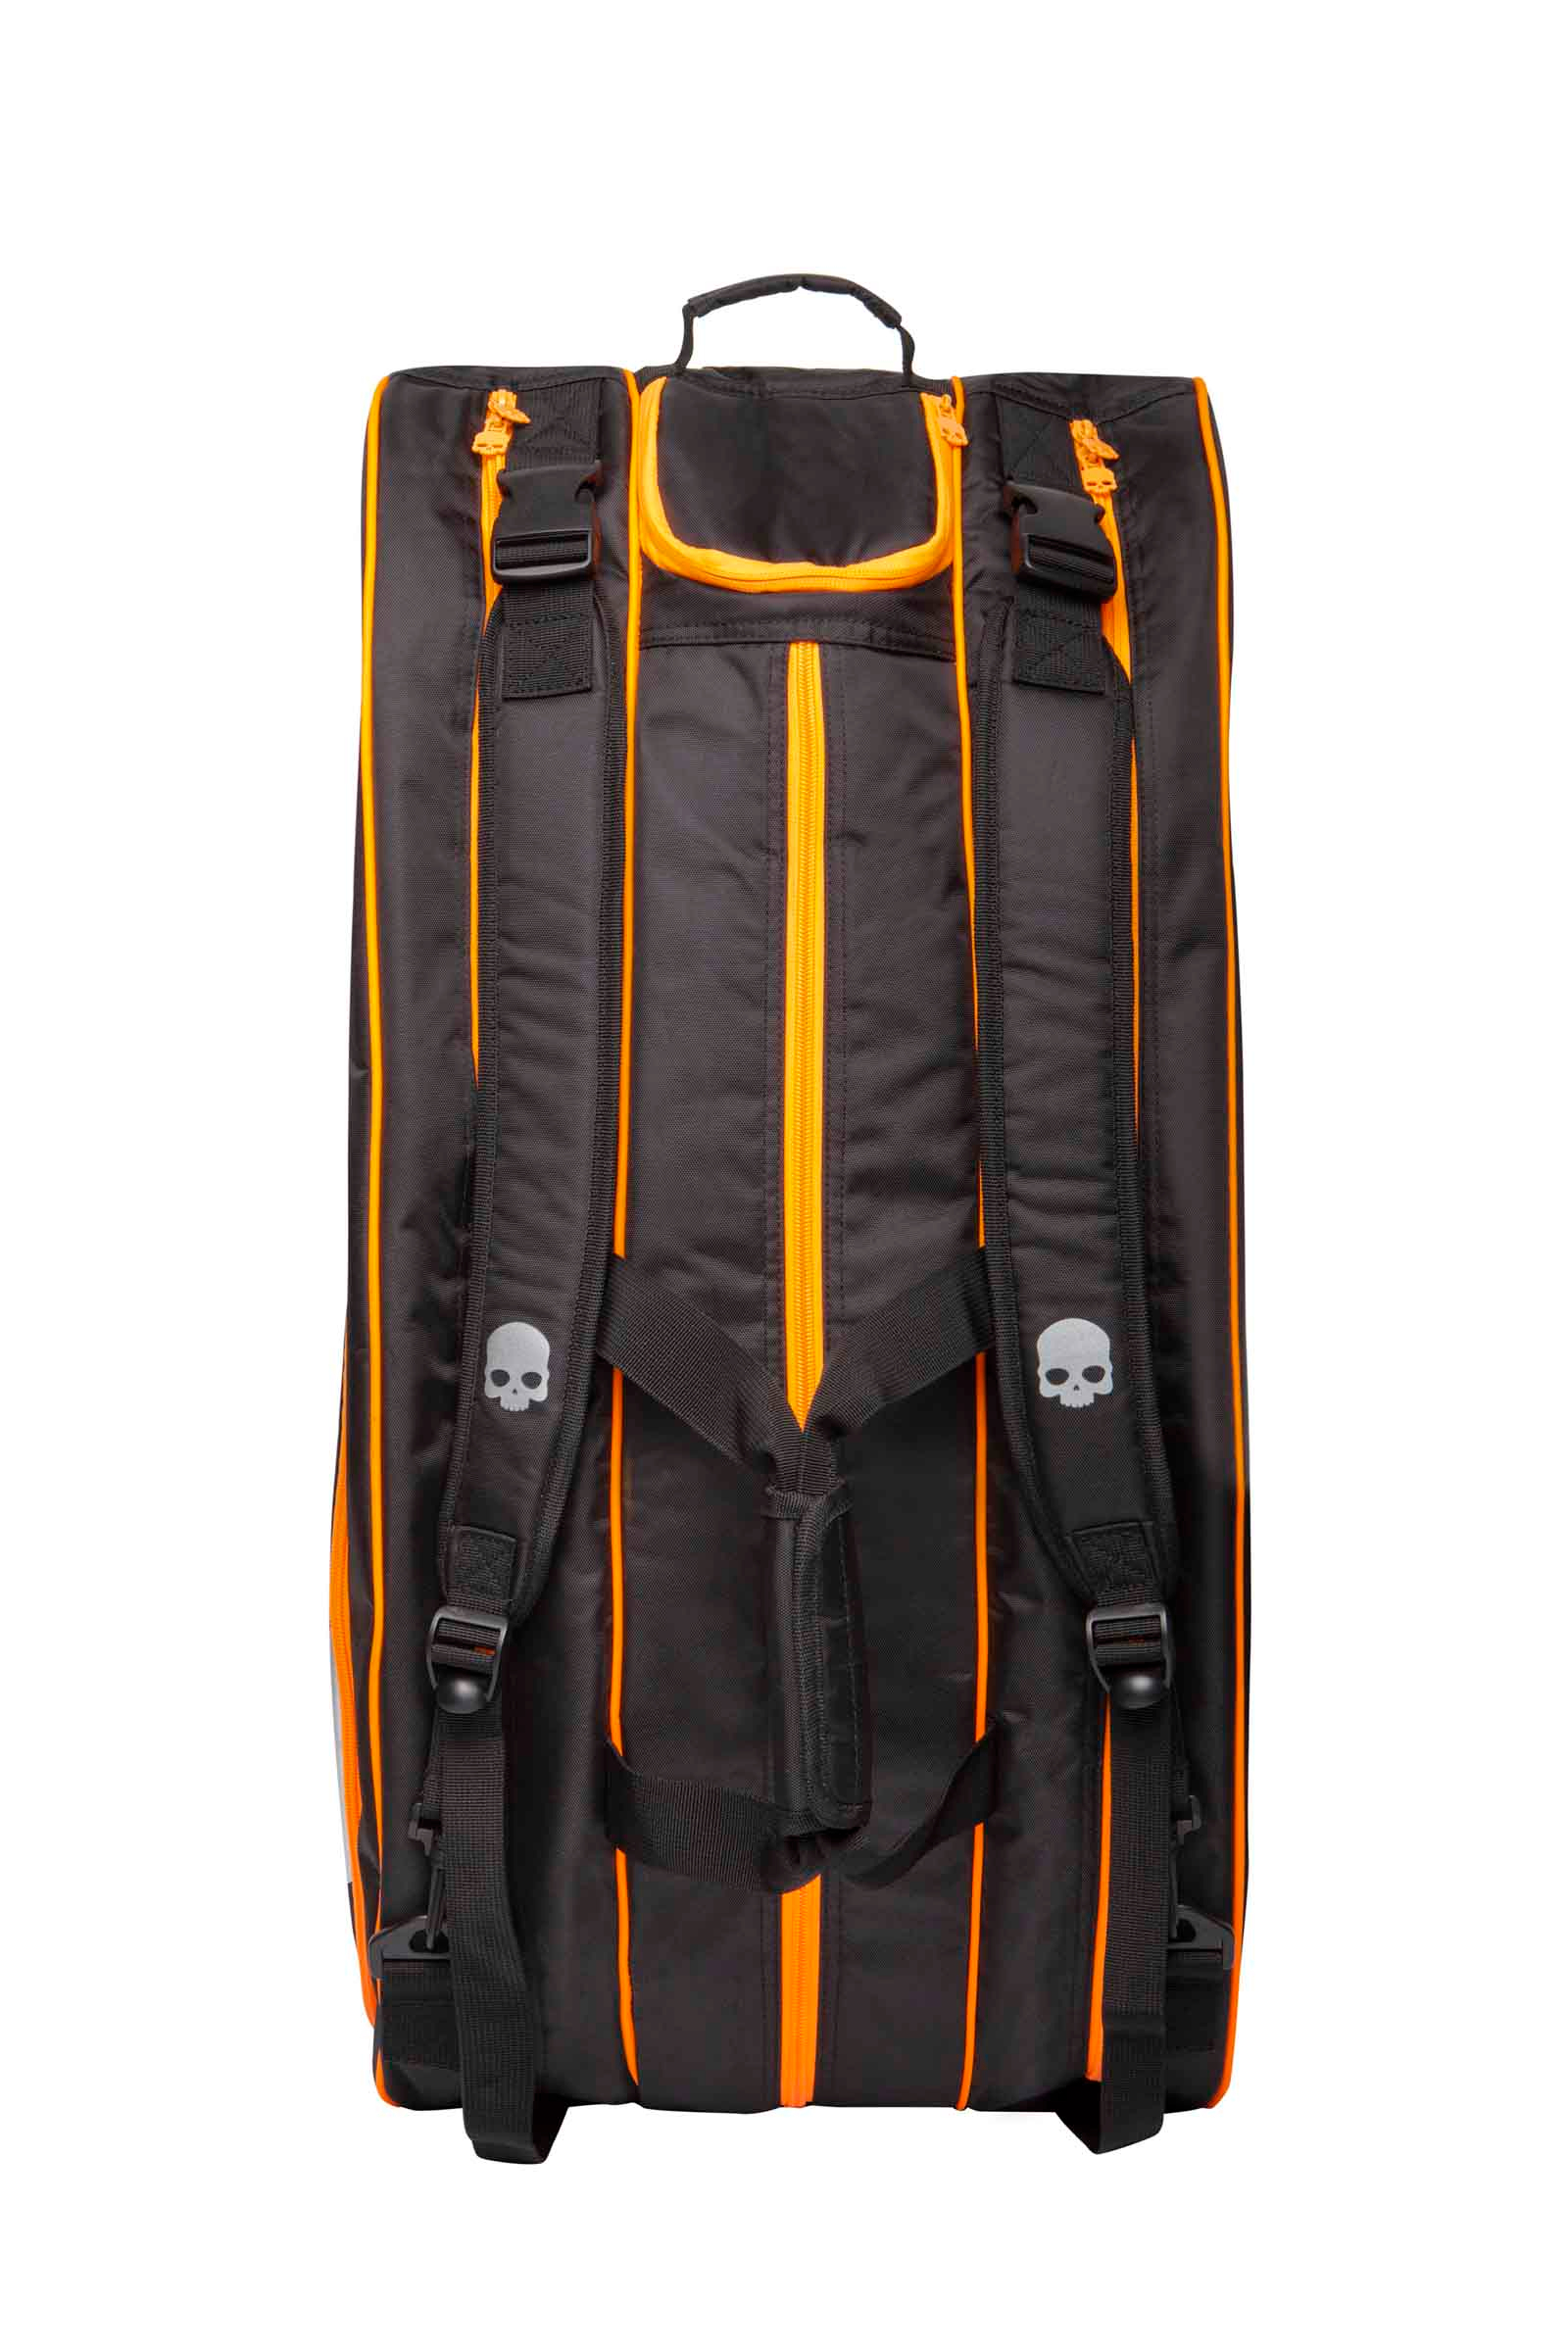 CHROME BAG PRINCE BY HYDROGEN - BLACK,ORANGE - Abbigliamento sportivo | Hydrogen